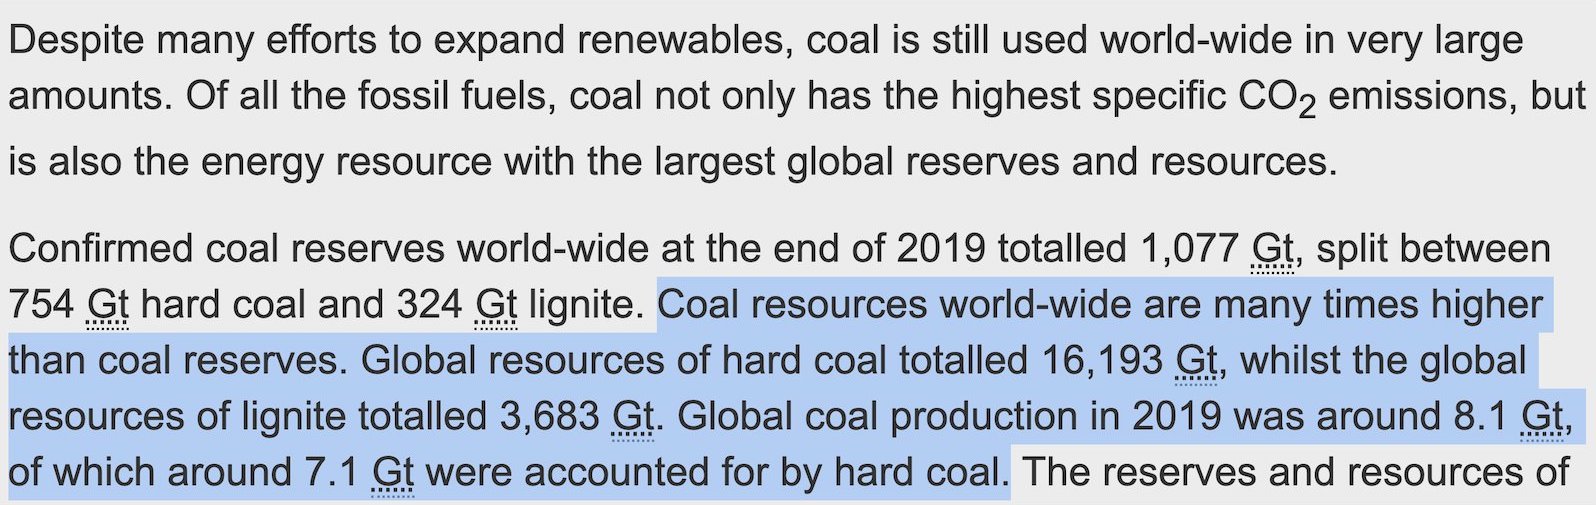 coal resources worldwide